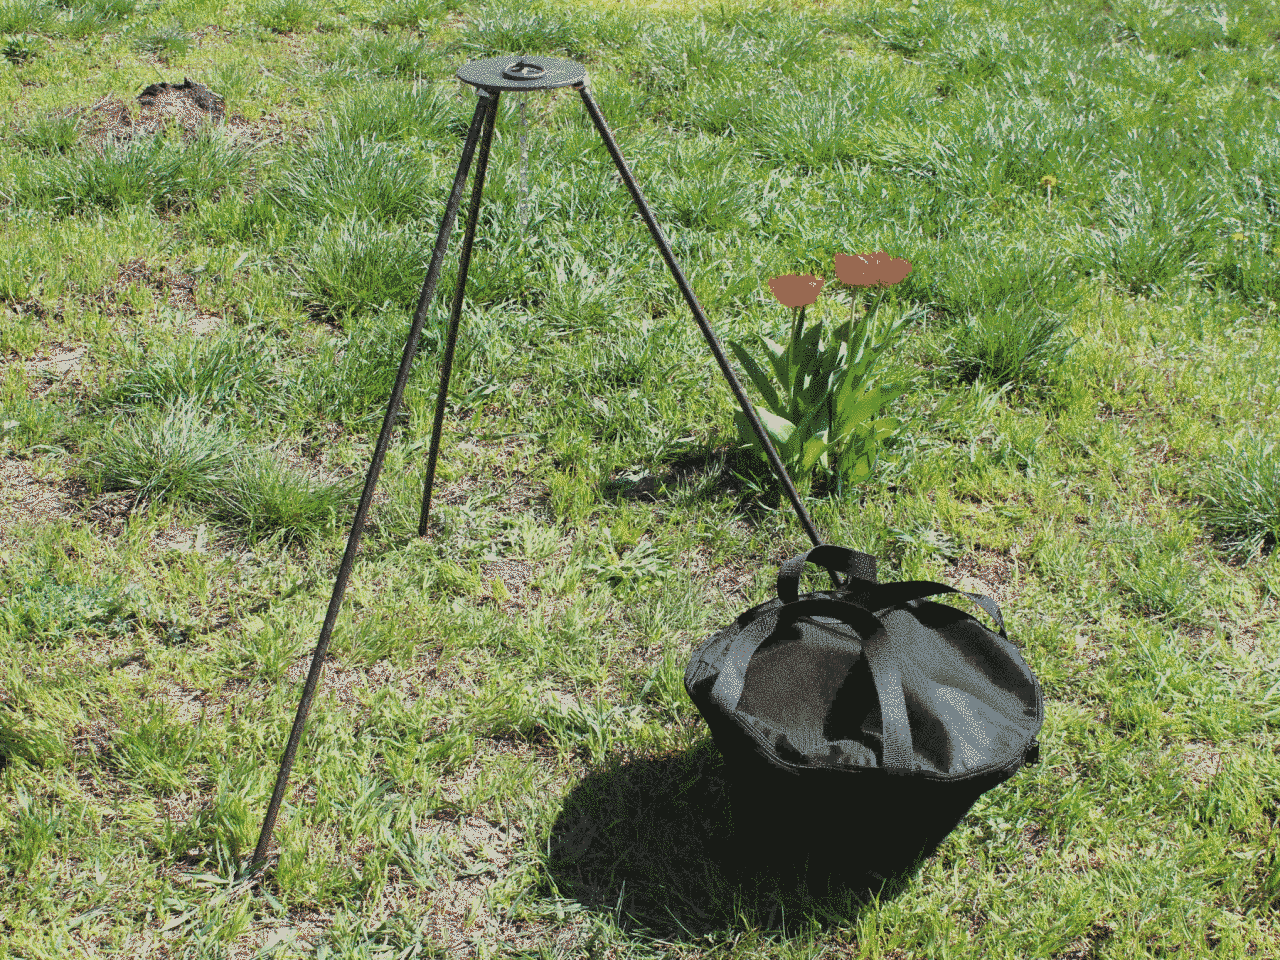 Cast iron asian 8 L cauldron WITH A LID, a tripod and a bag